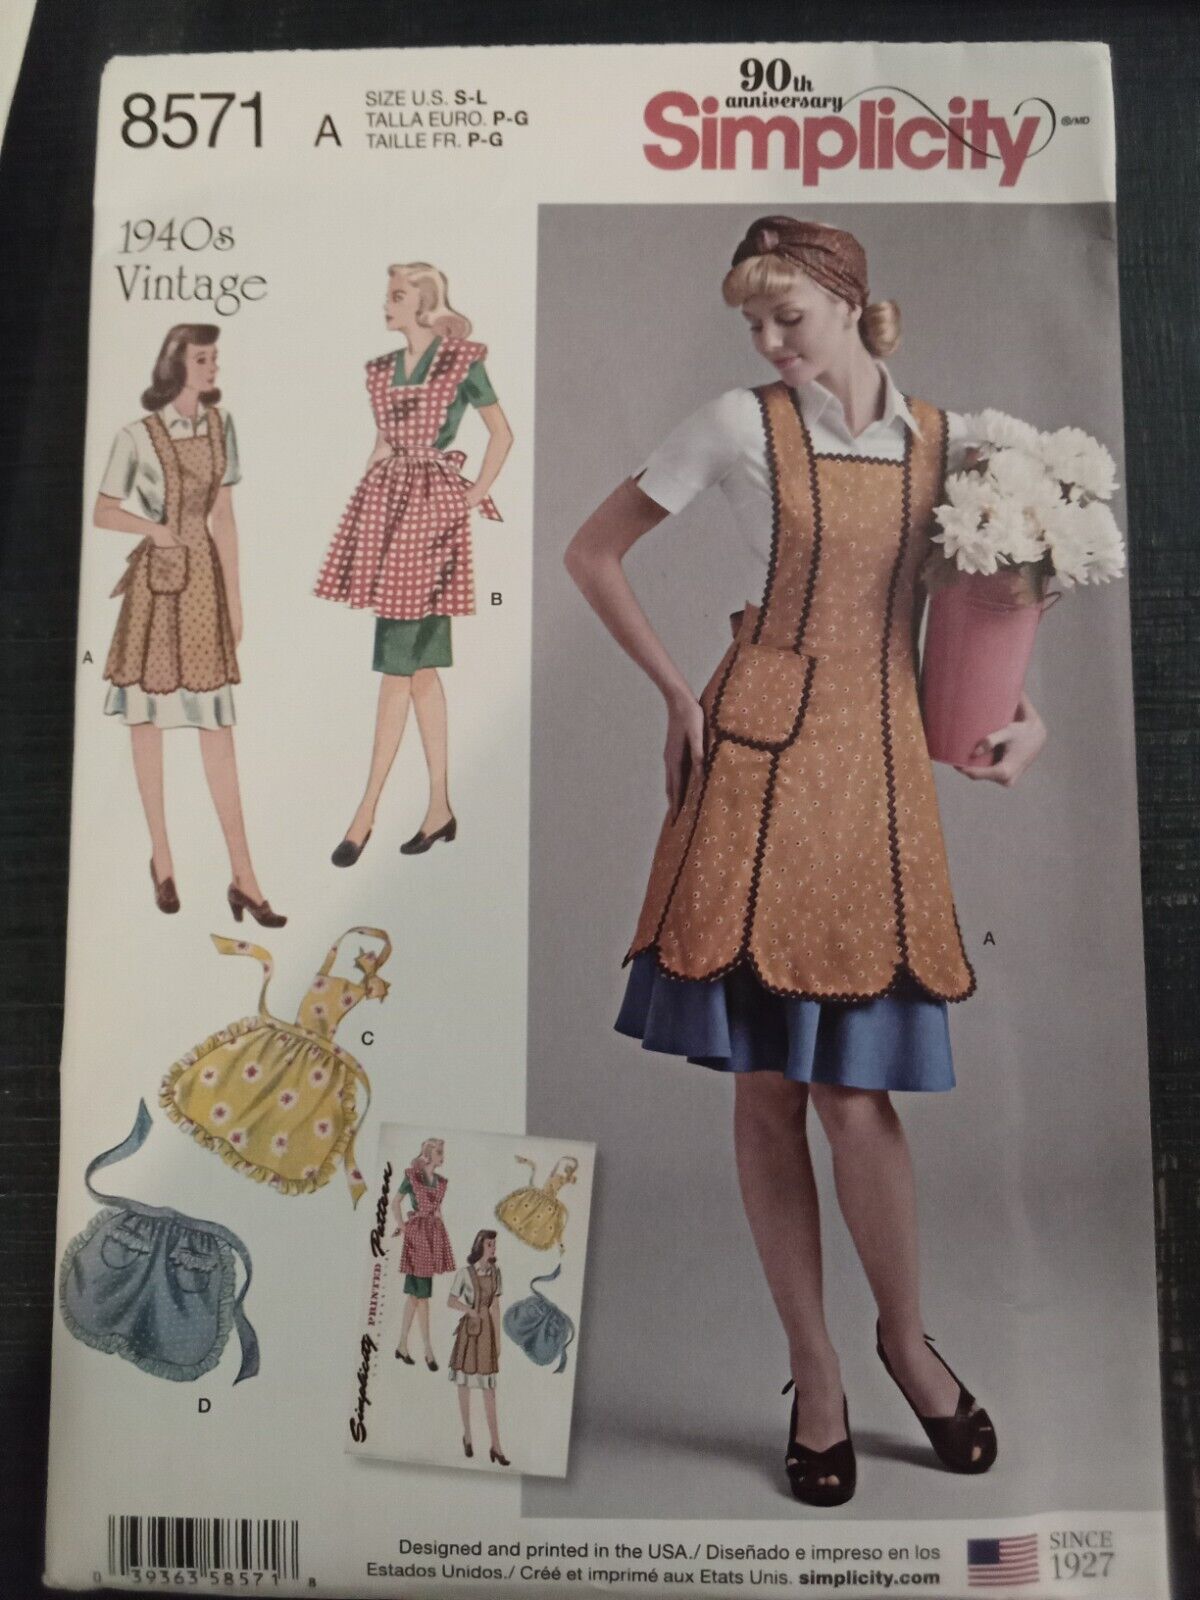 Simplicity 1940s Vintage Aprons Sewing Pattern #8571 sz S-L